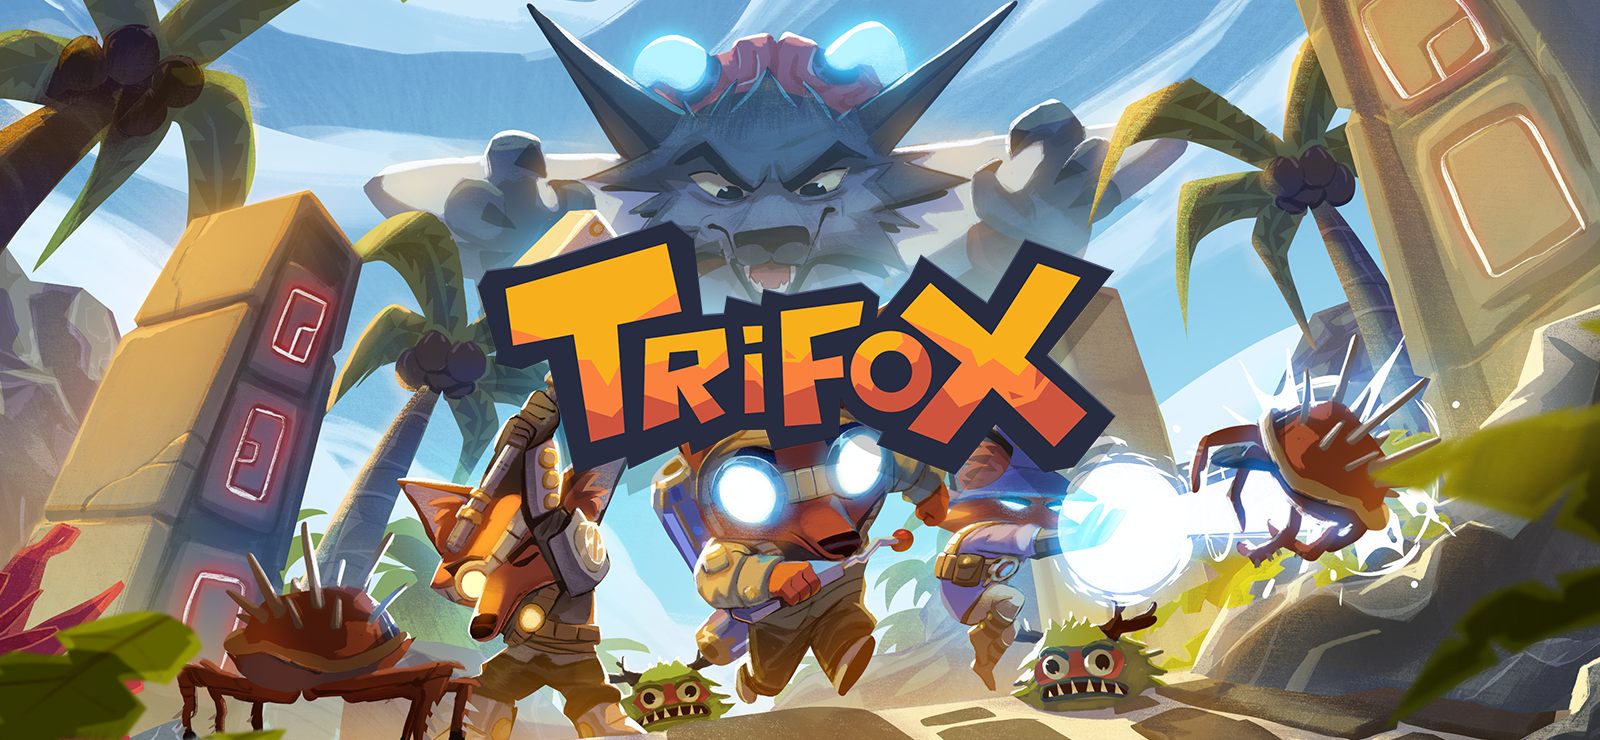 Trifox review – My dear Foxy